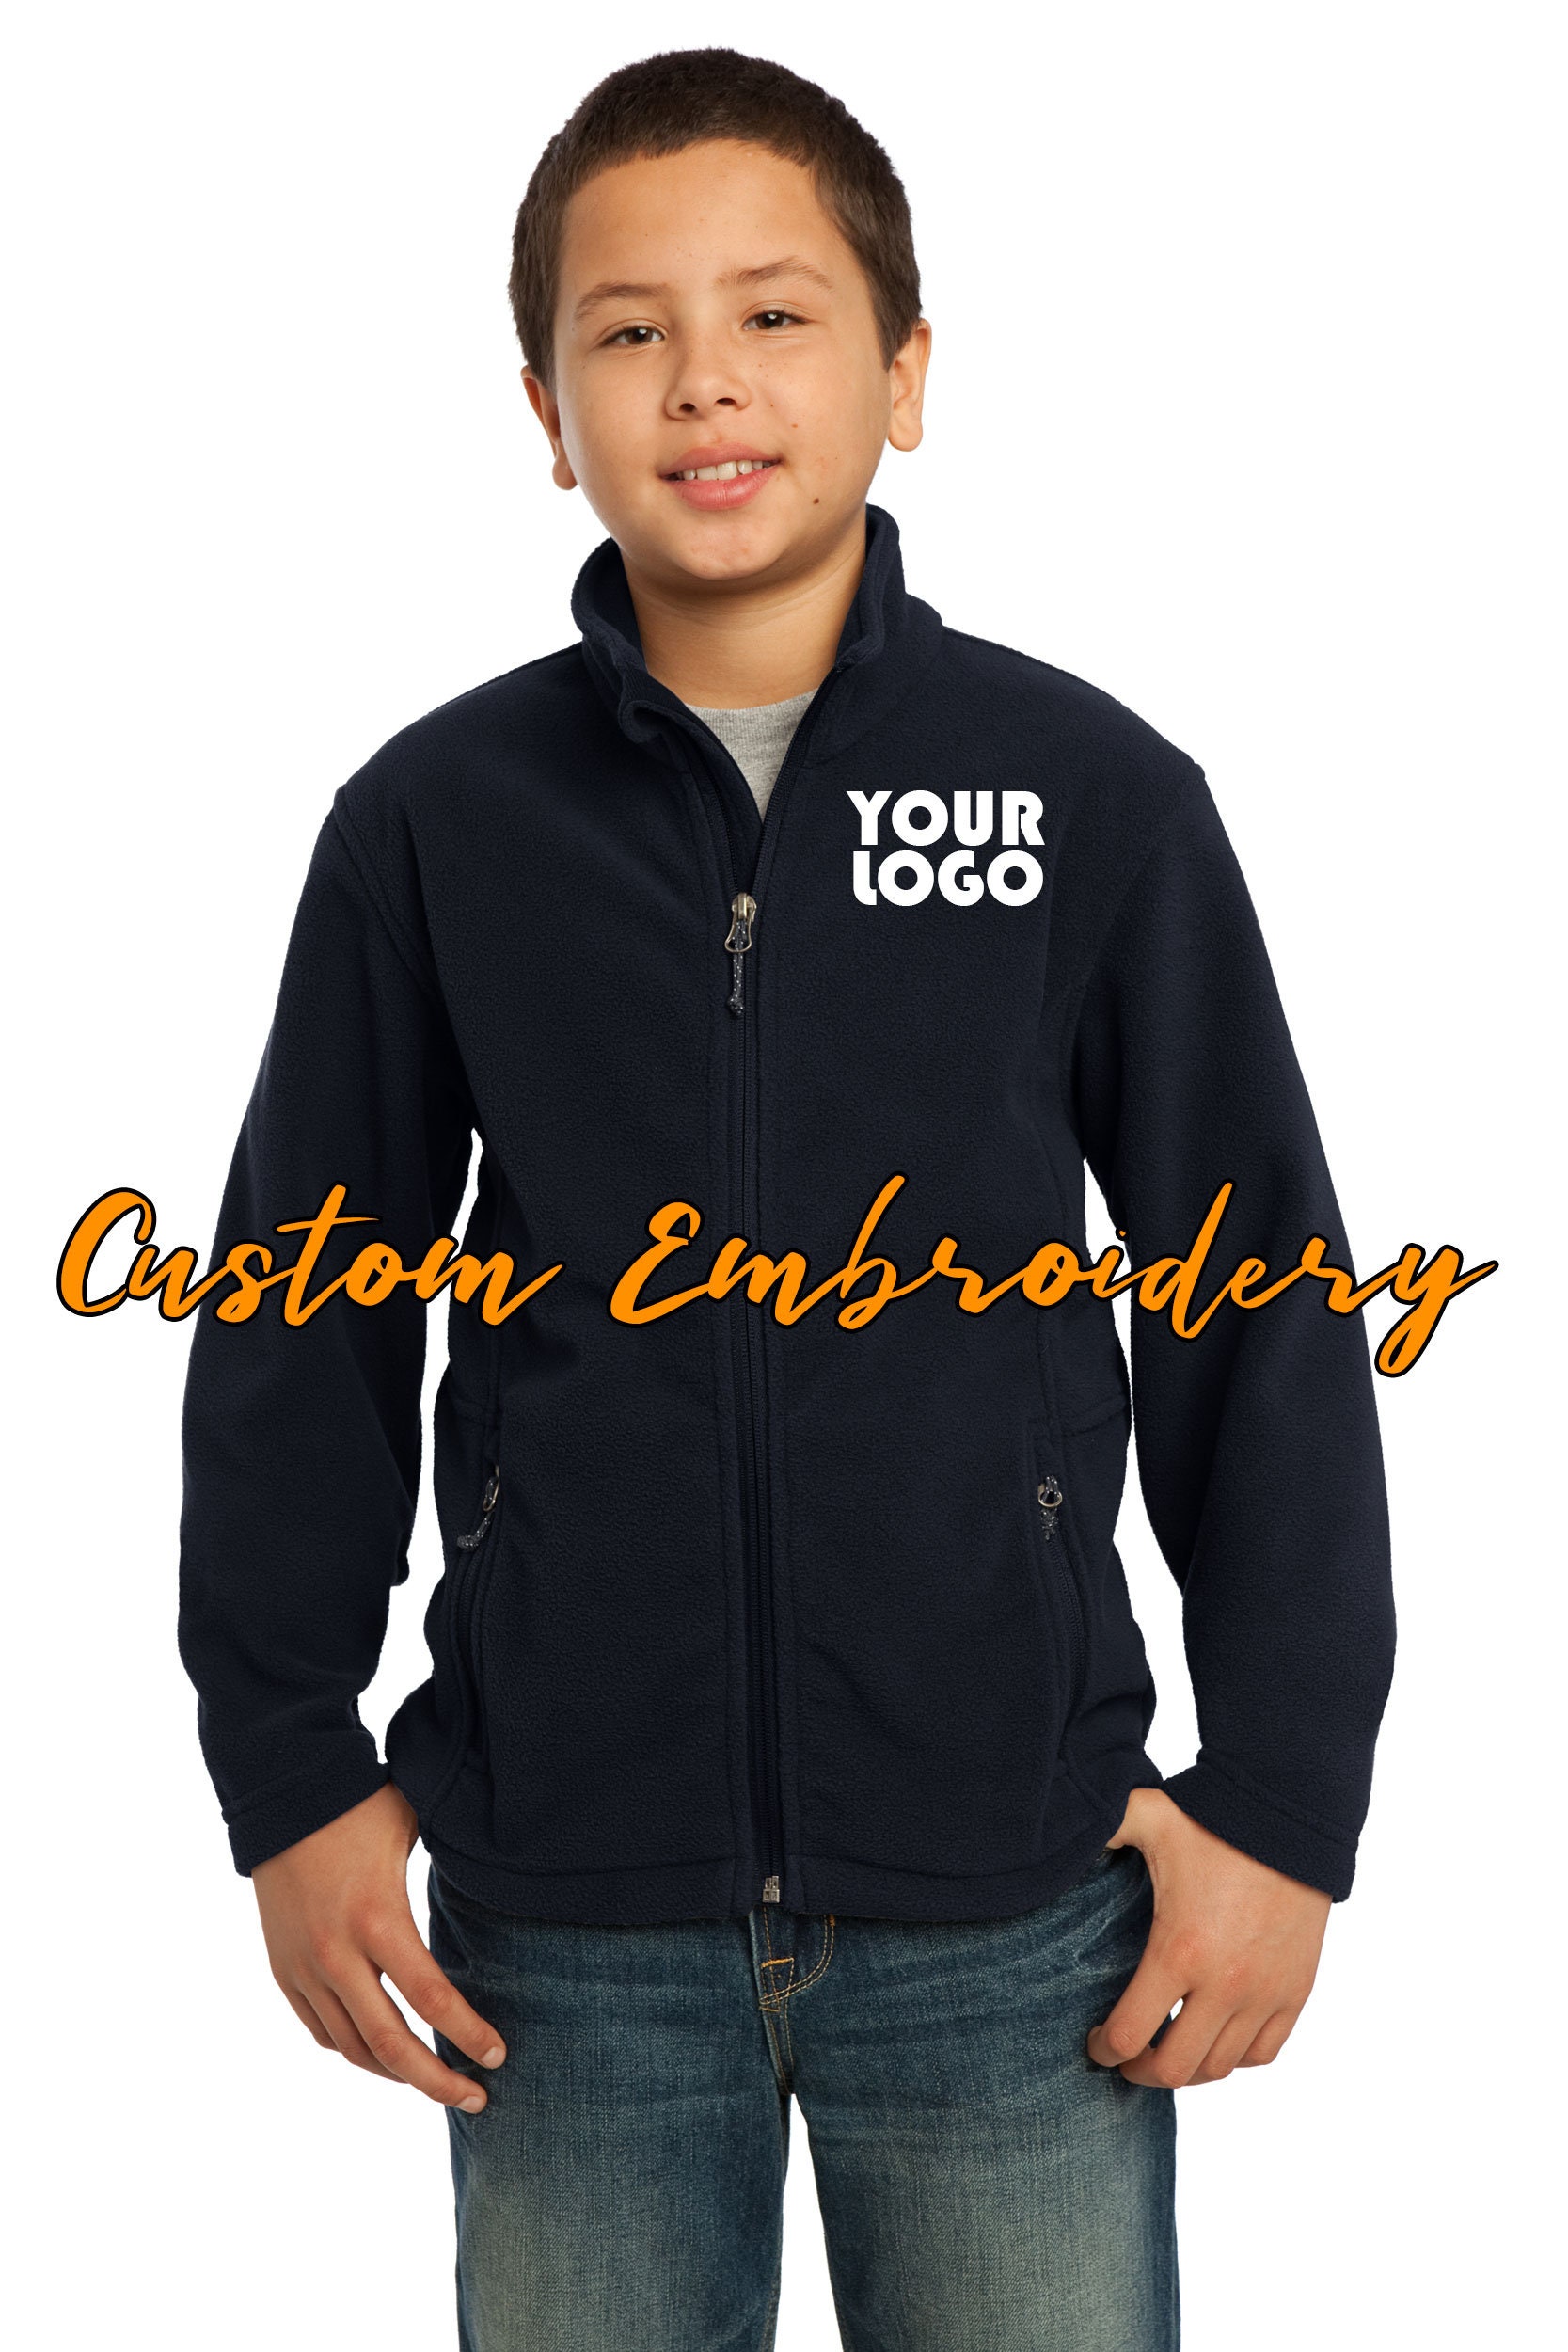 Personalized Youth Fleece Jacket Embroidered Monogram 